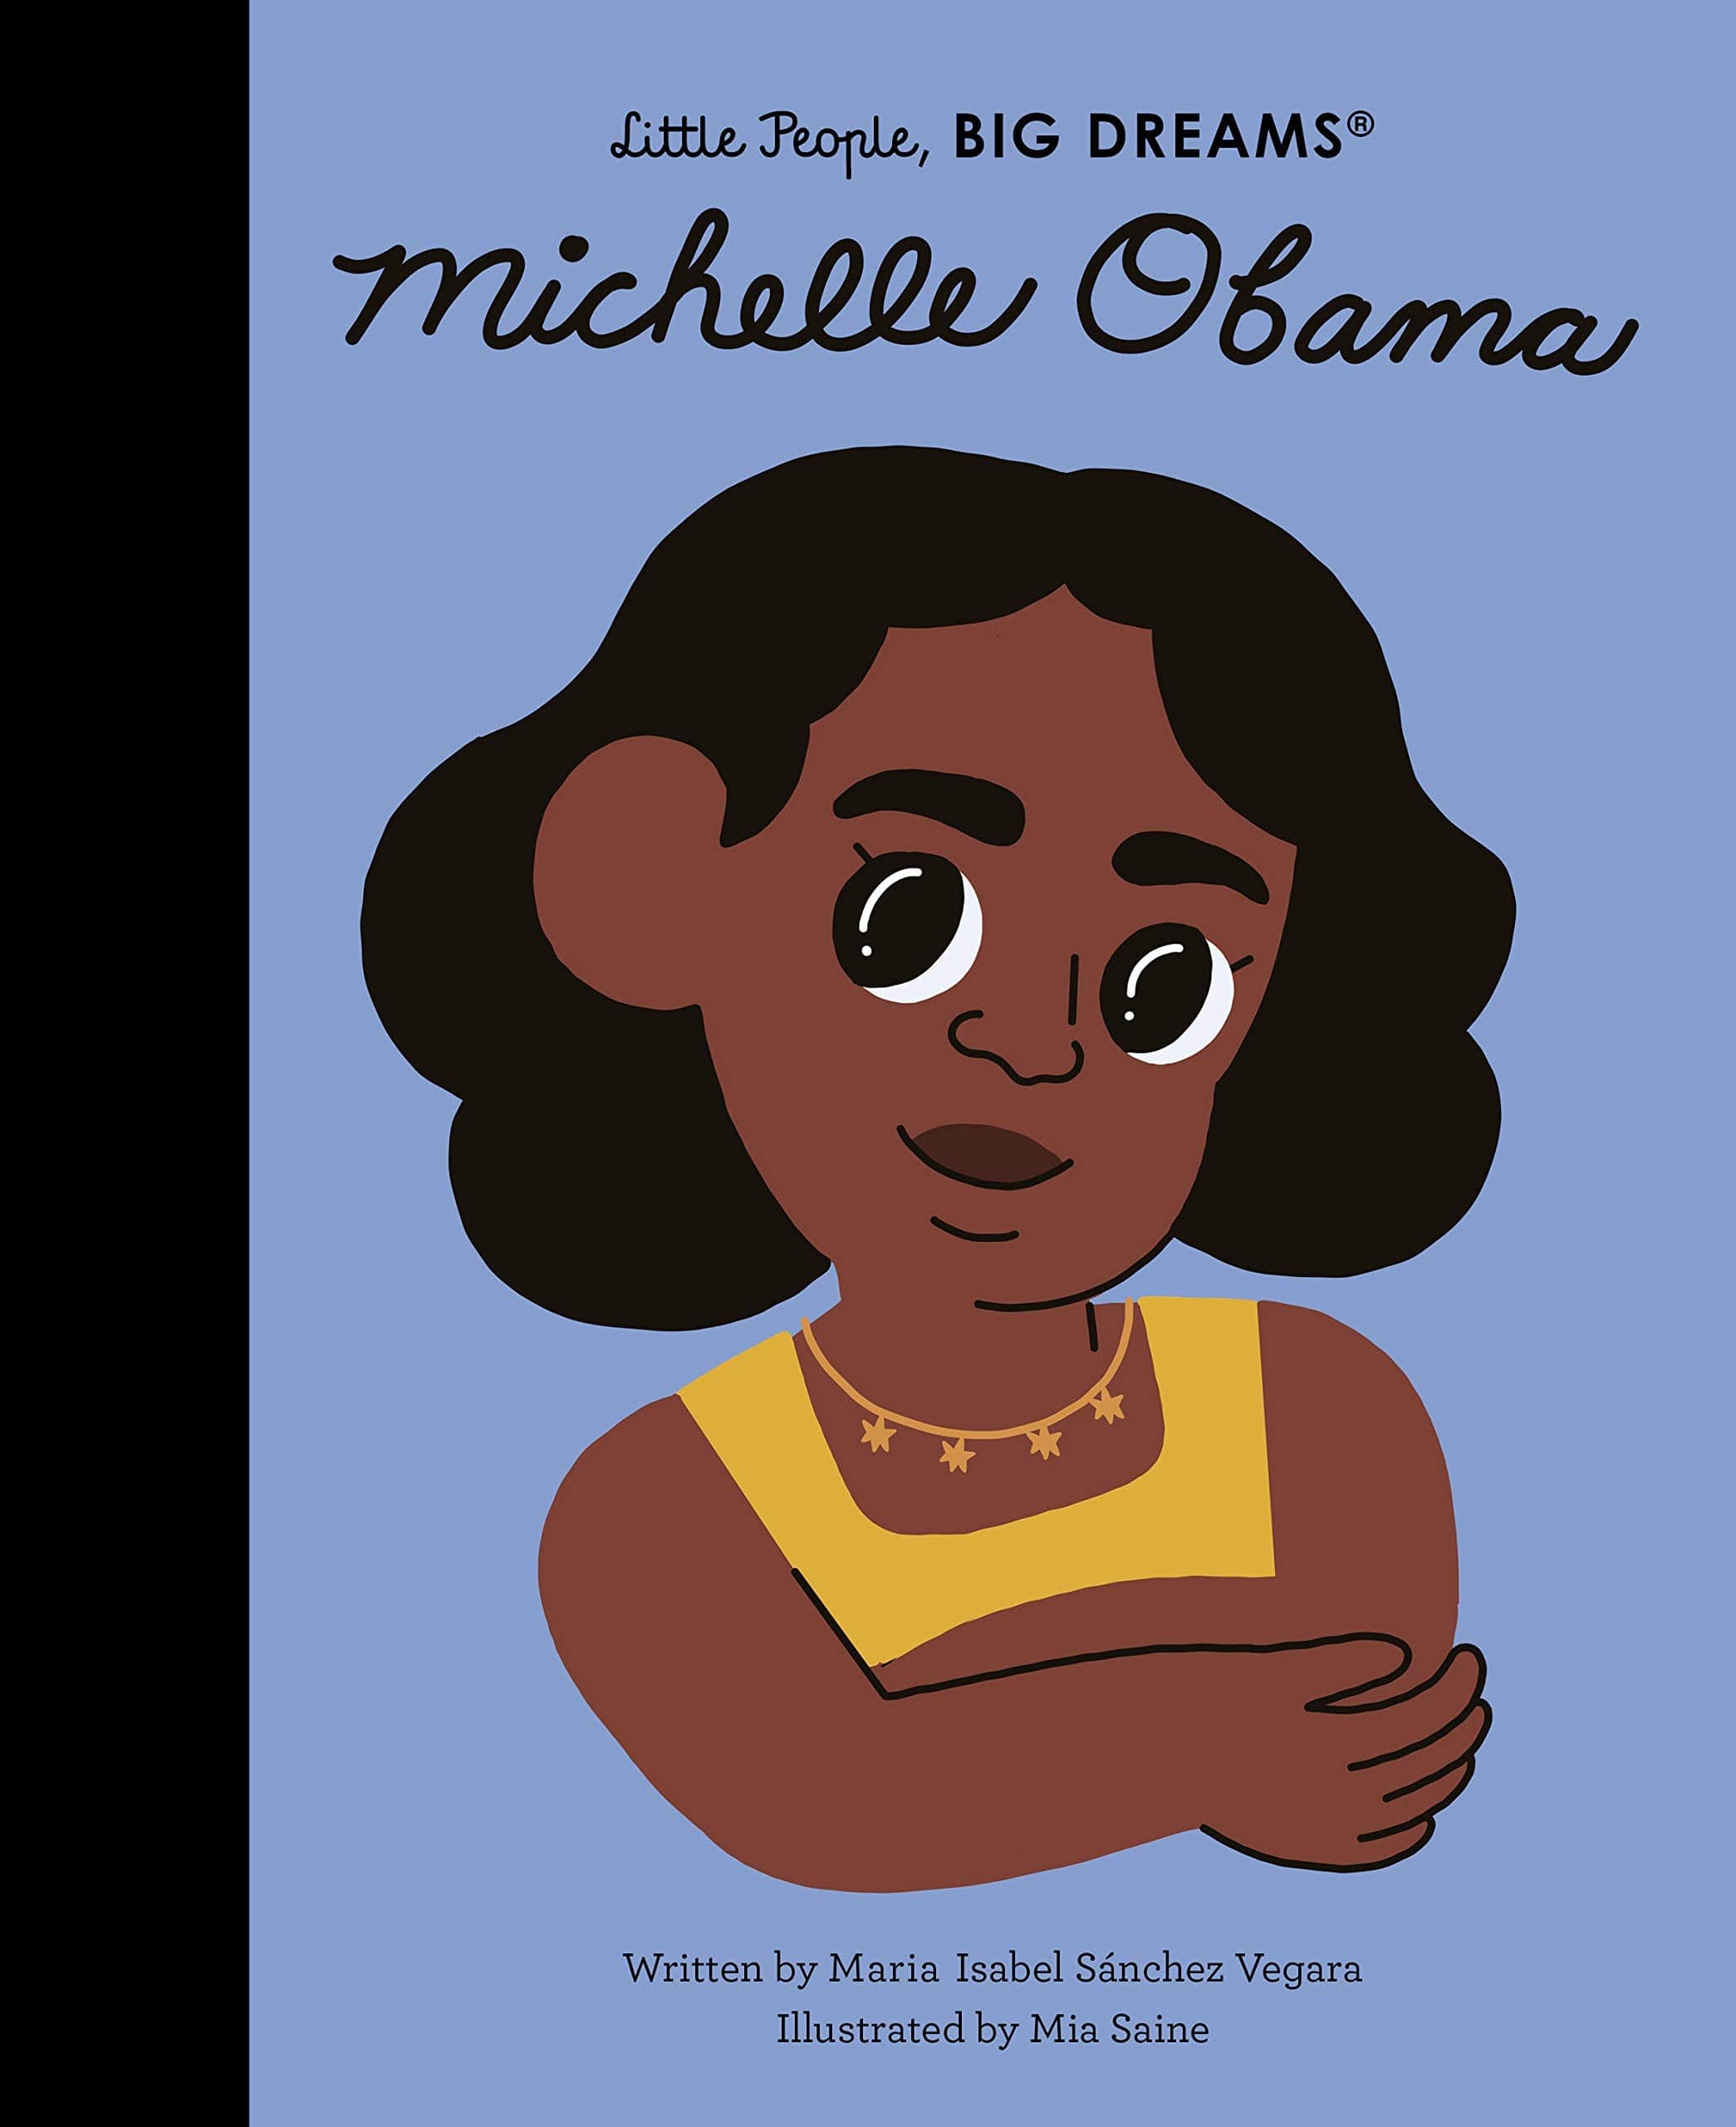 LPBD: Michelle Obama